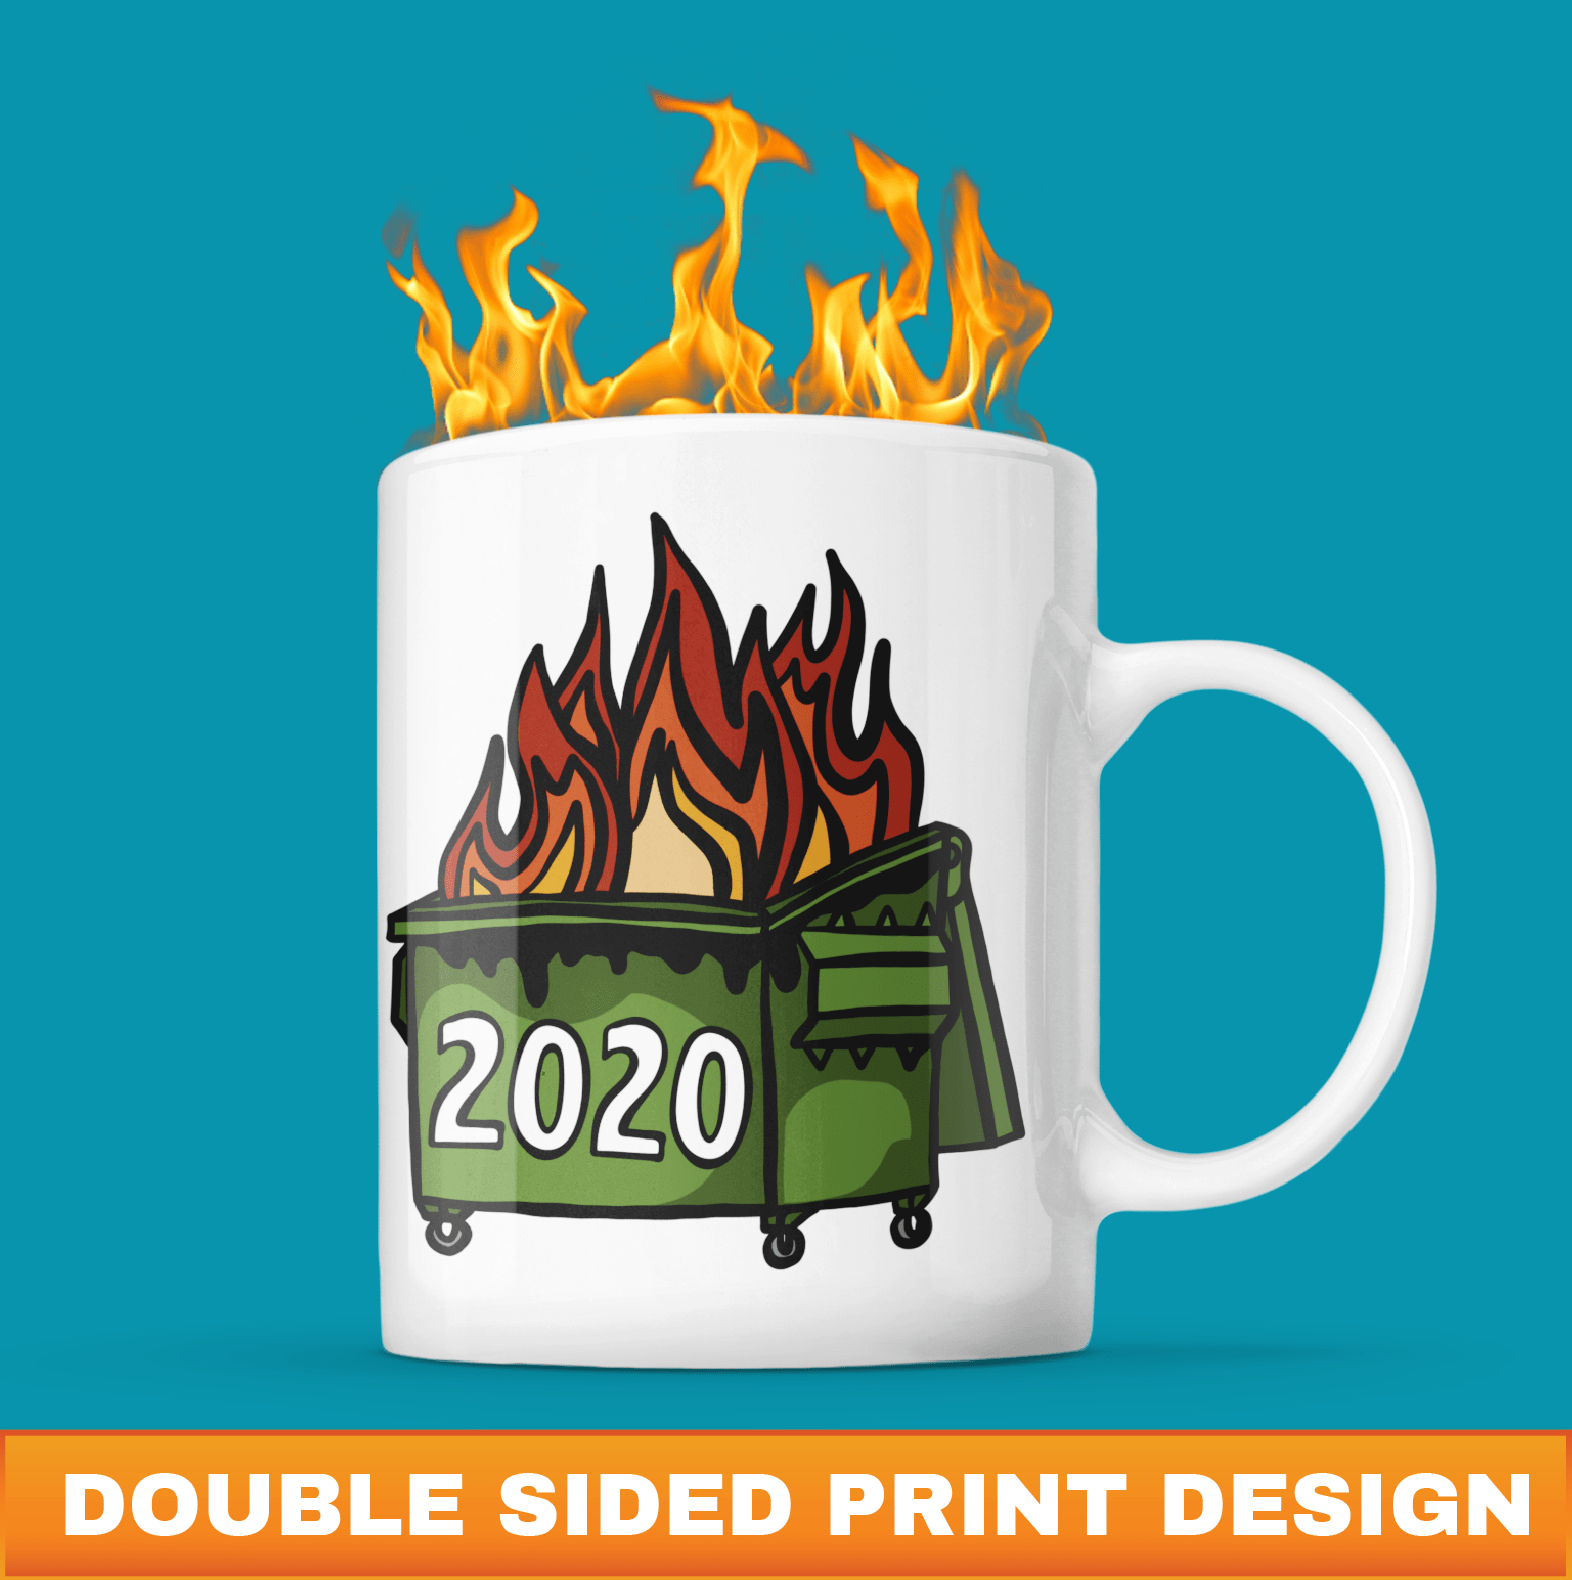 2020 Dumpster Fire 🗑️ - Coffee Mug